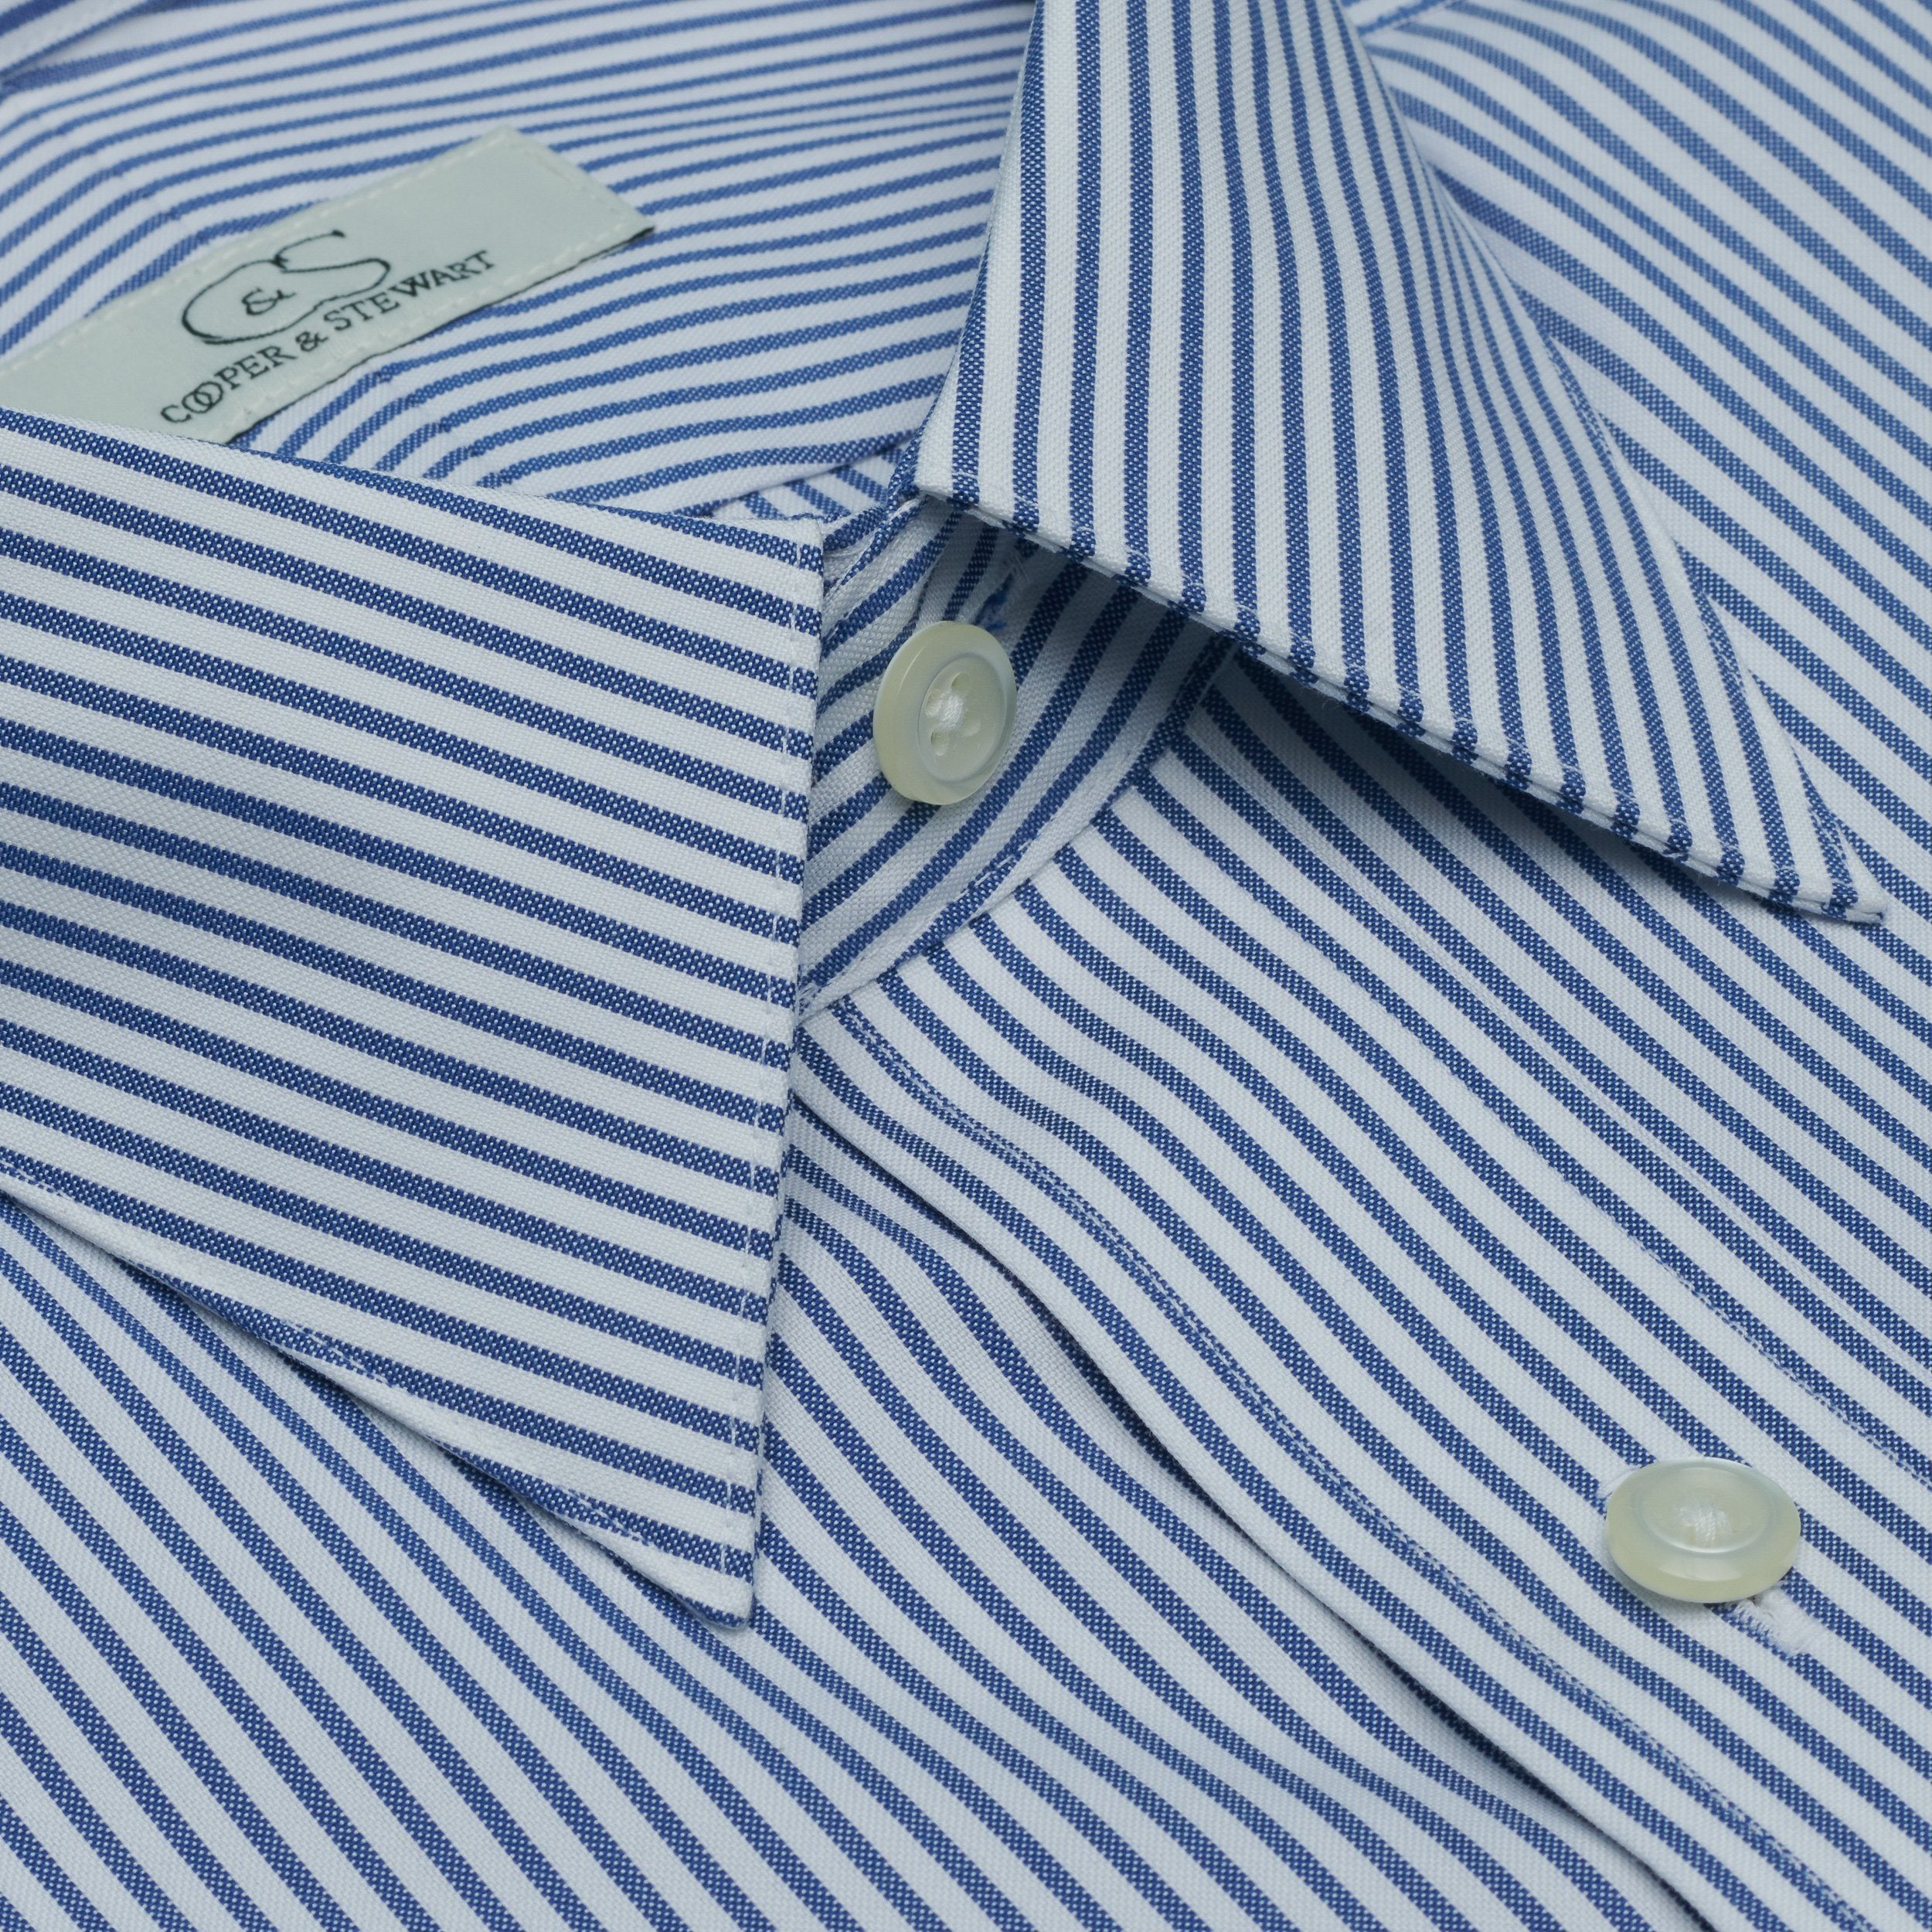 THE BURLINGTON - Blue Bankers Stripe SC Dress Shirt Cooper and Stewart 